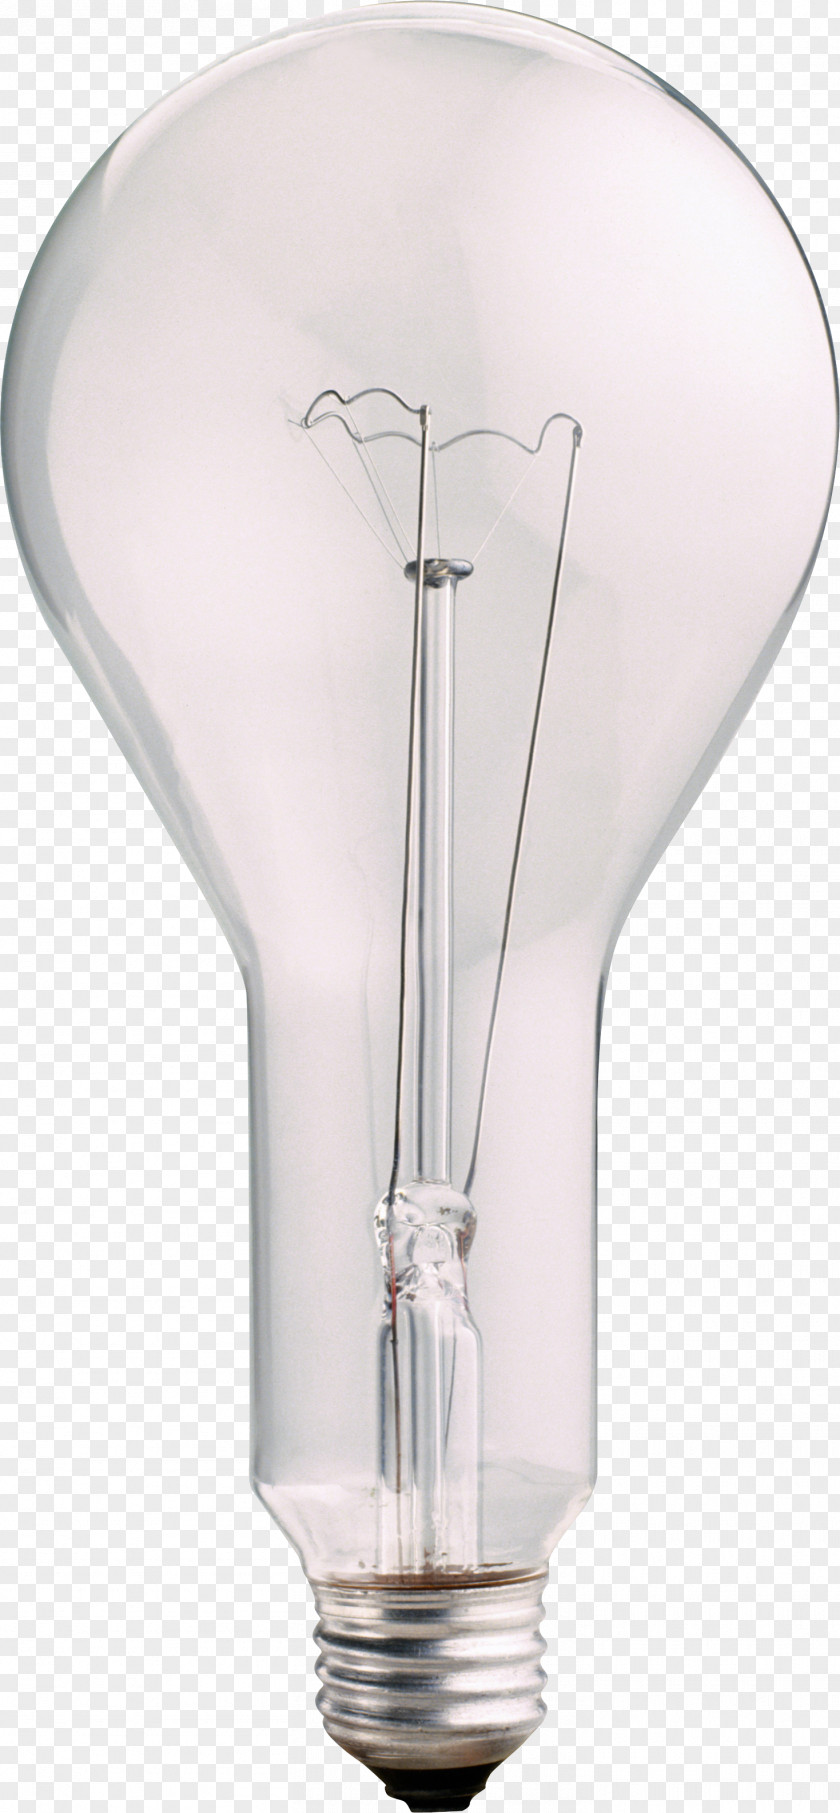 Lamp Image Incandescent Light Bulb Lighting PNG